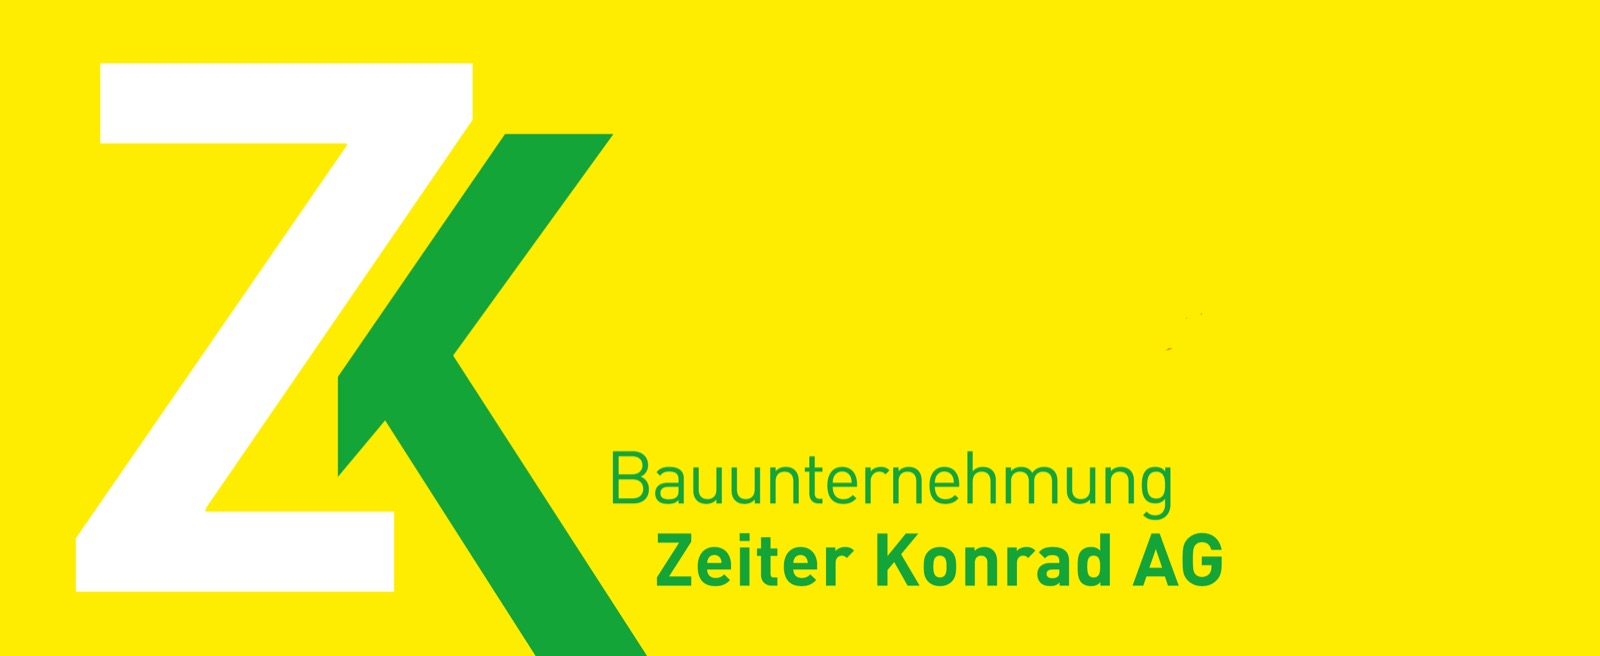 Zeiter Konrad AG